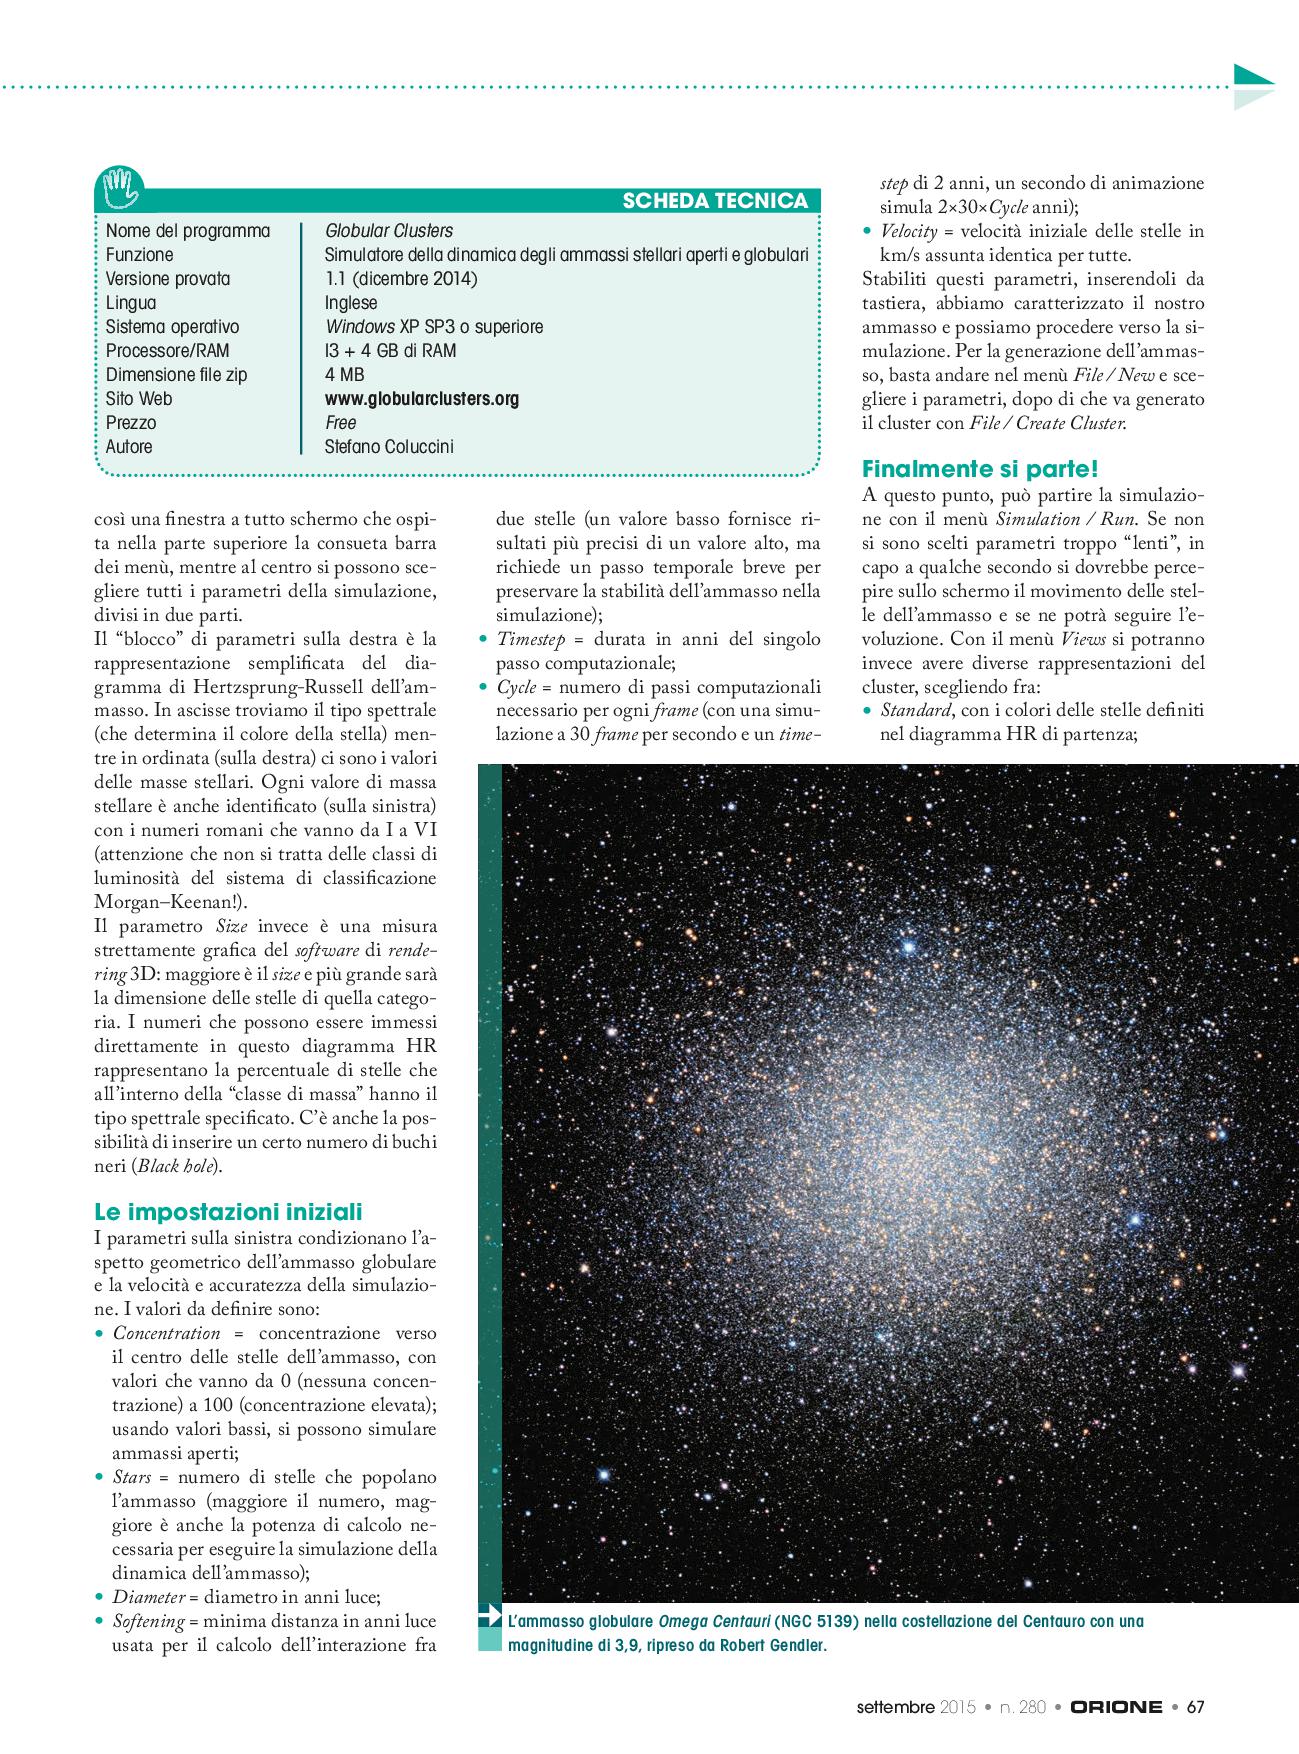 Vetrina del software: Globular Clusters